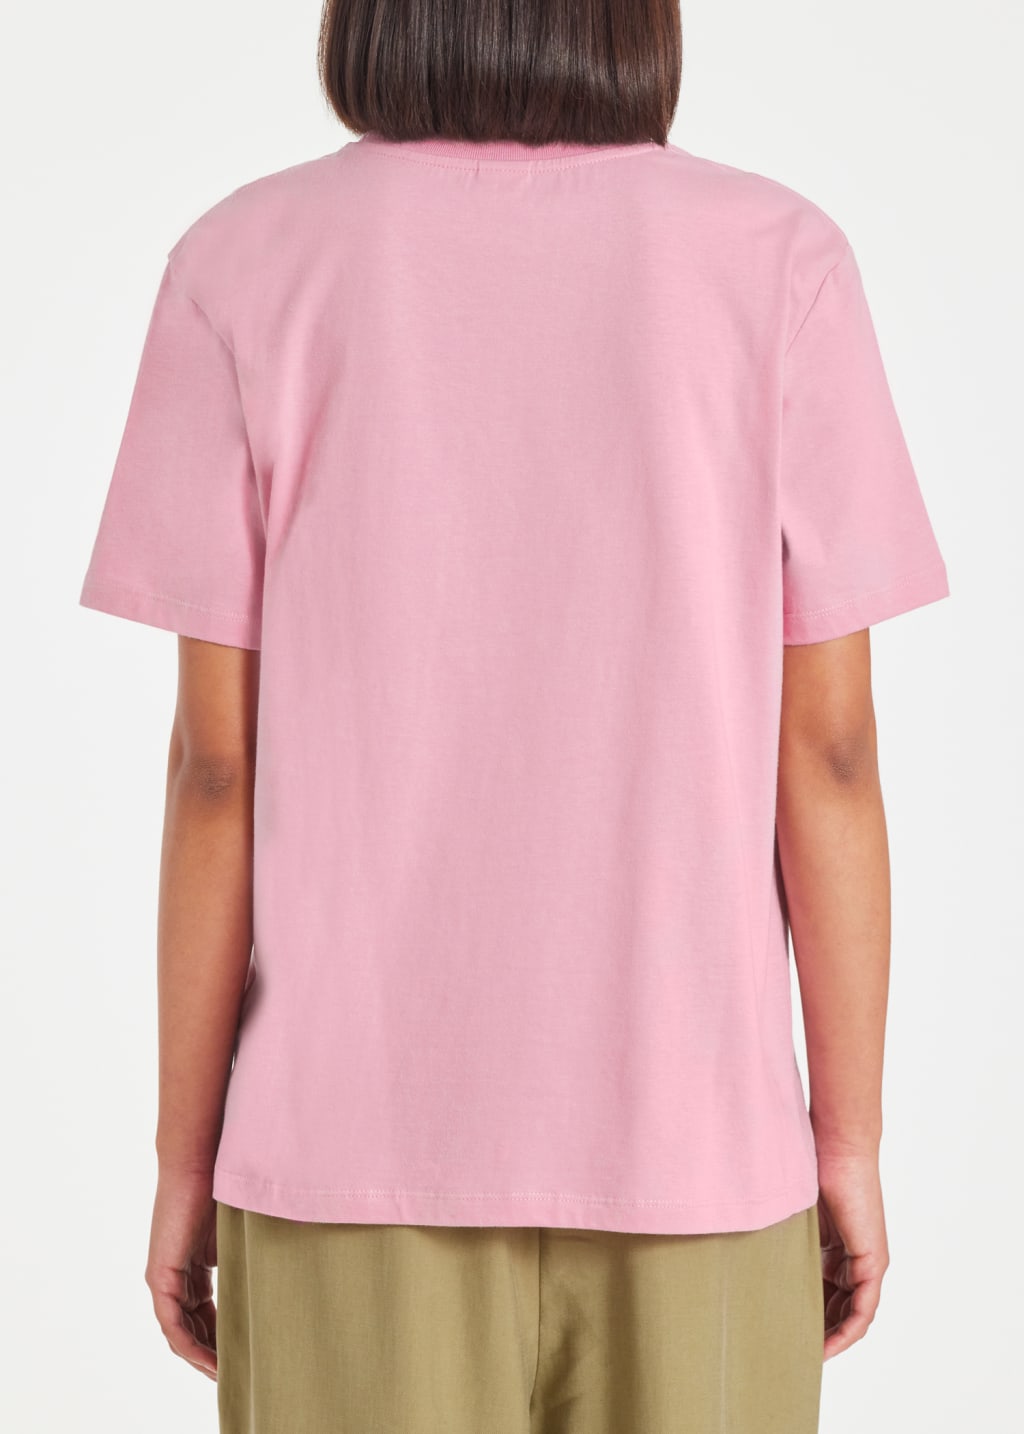 Model View - Women's Pink'Sunshine & Showers' Cotton T-Shirt by Paul Smith